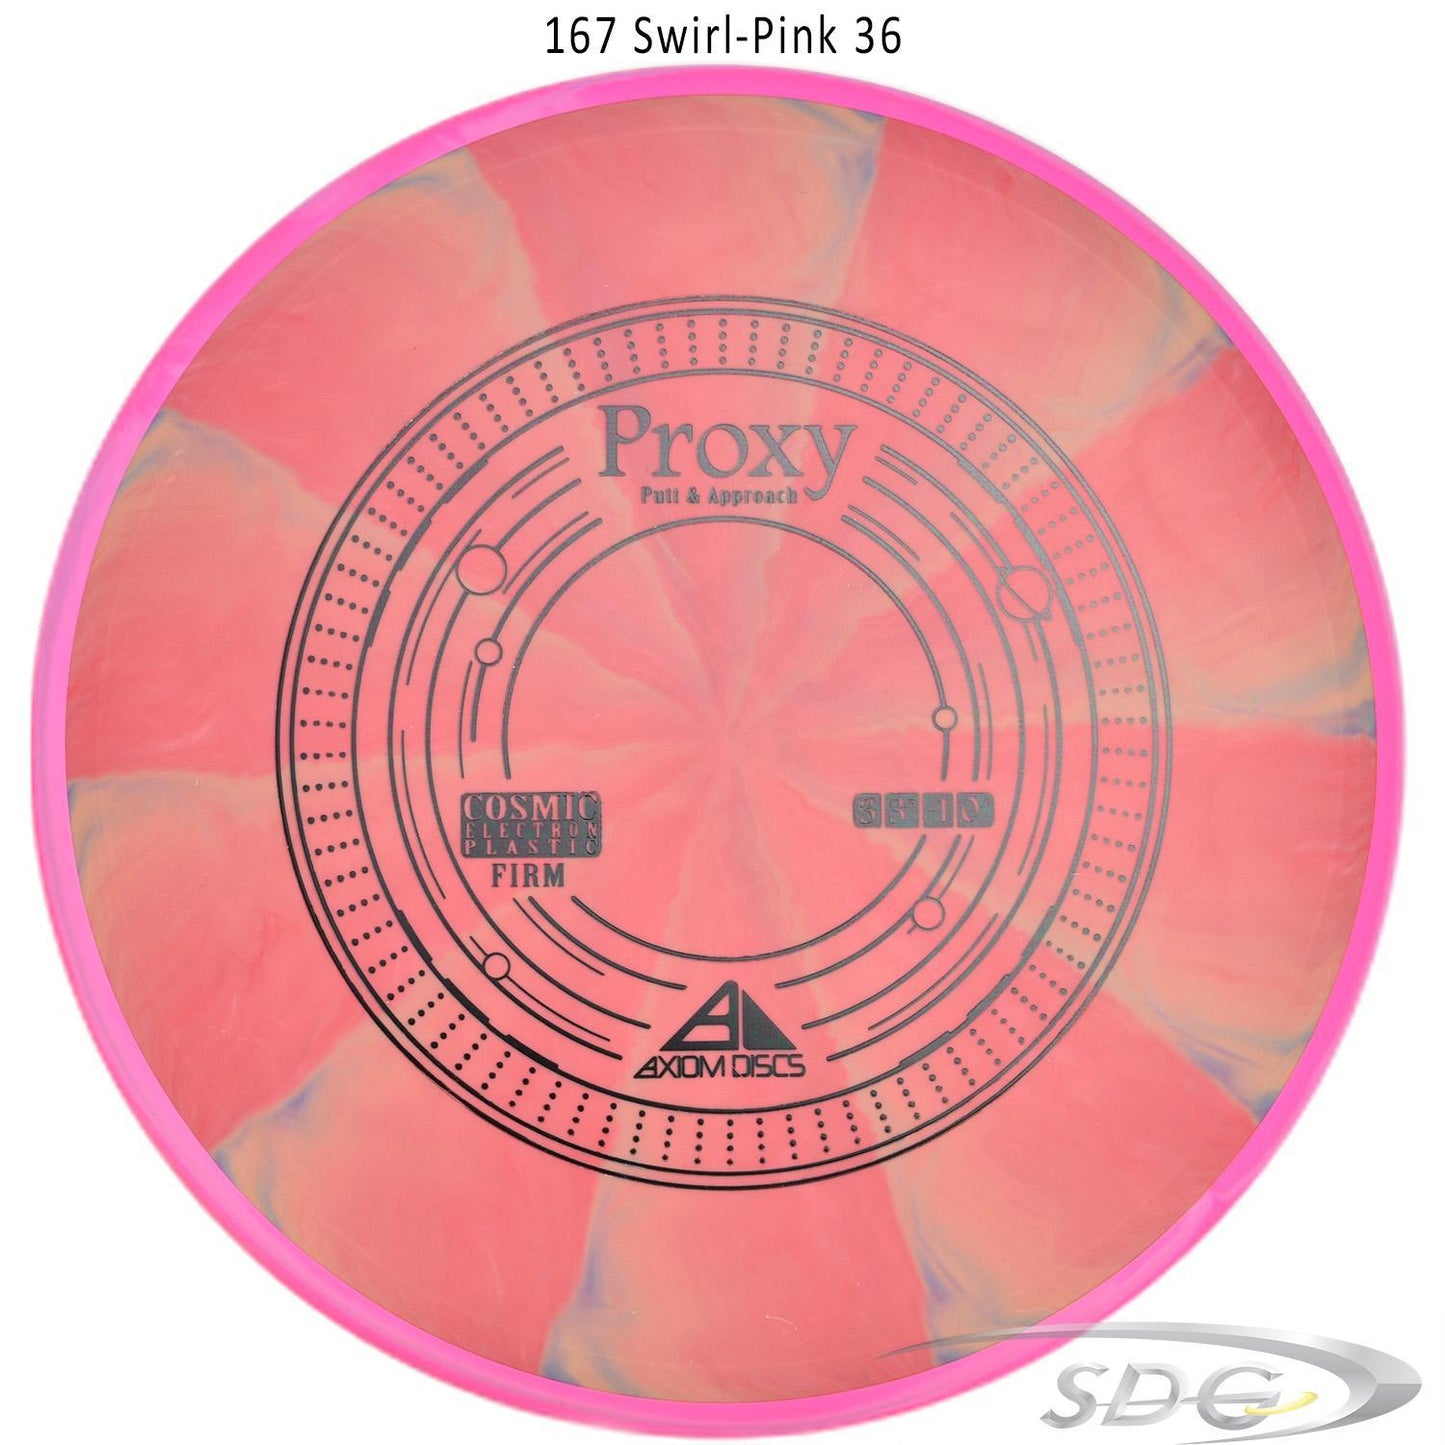 axiom-cosmic-electron-proxy-firm-disc-golf-putt-approach 167 Swirl-Pink 36 